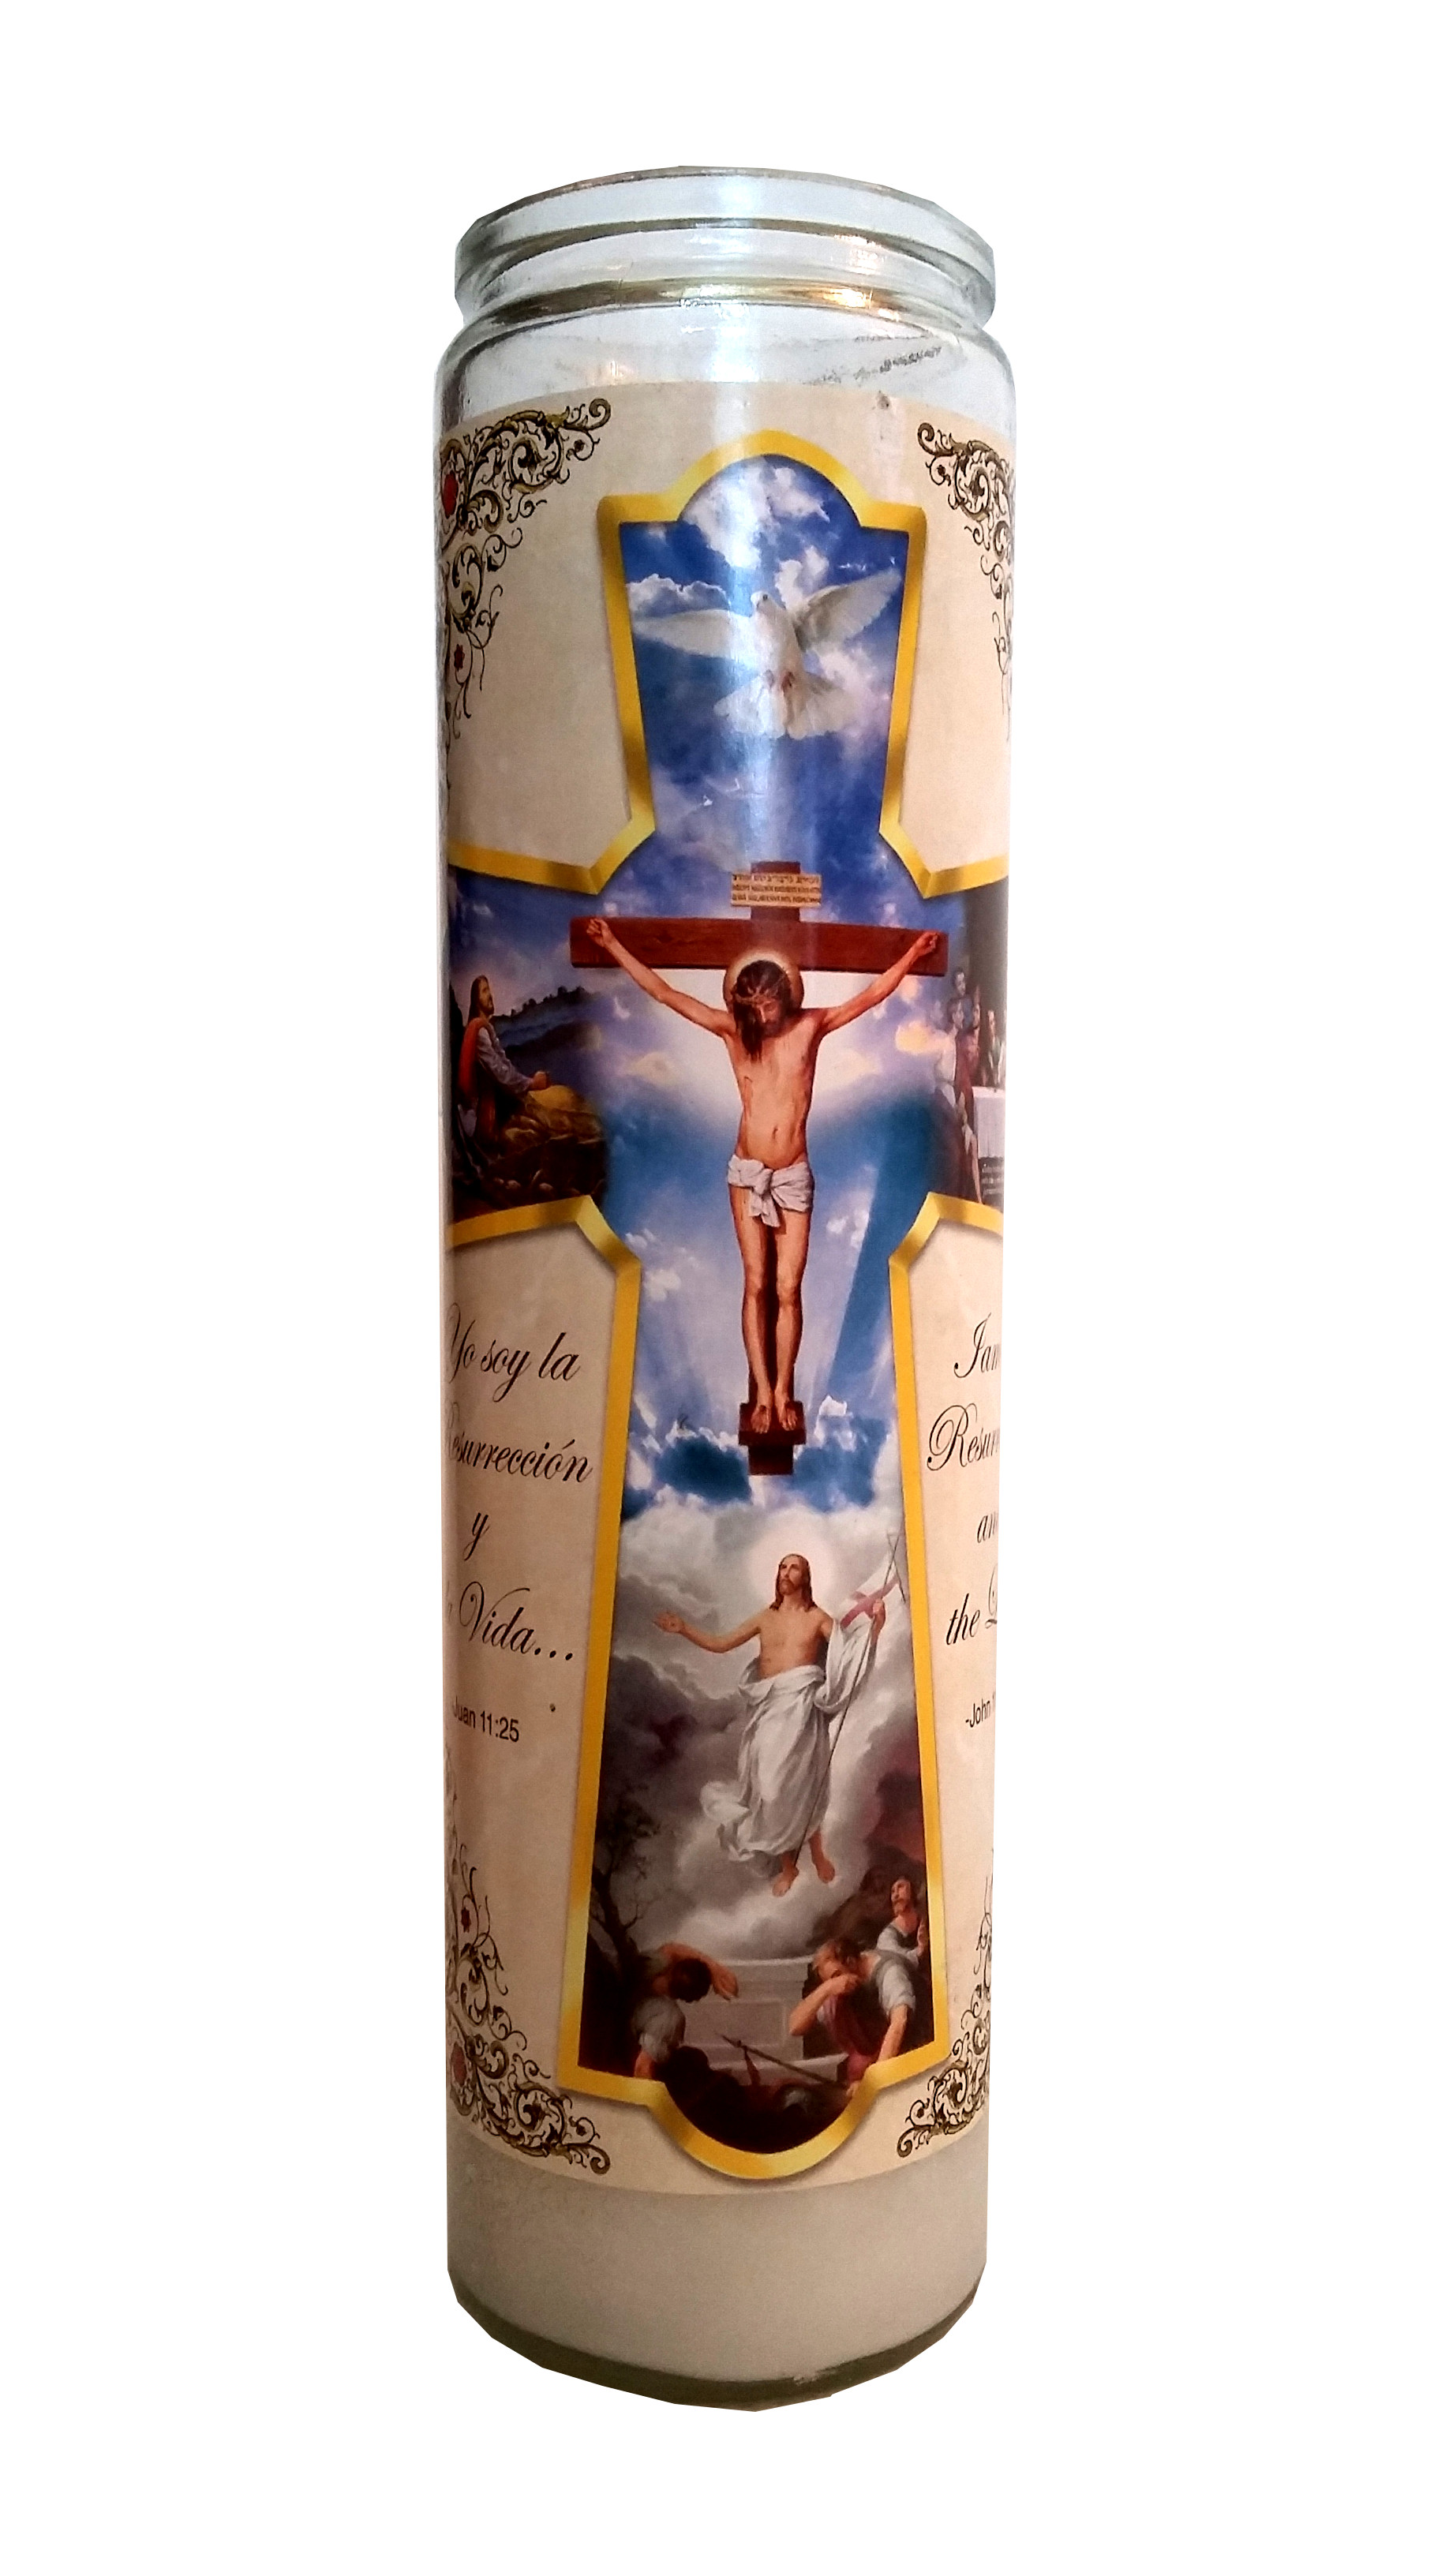 Resurrection (La Resurreccion ) Devotional Candle - image 1 of 2